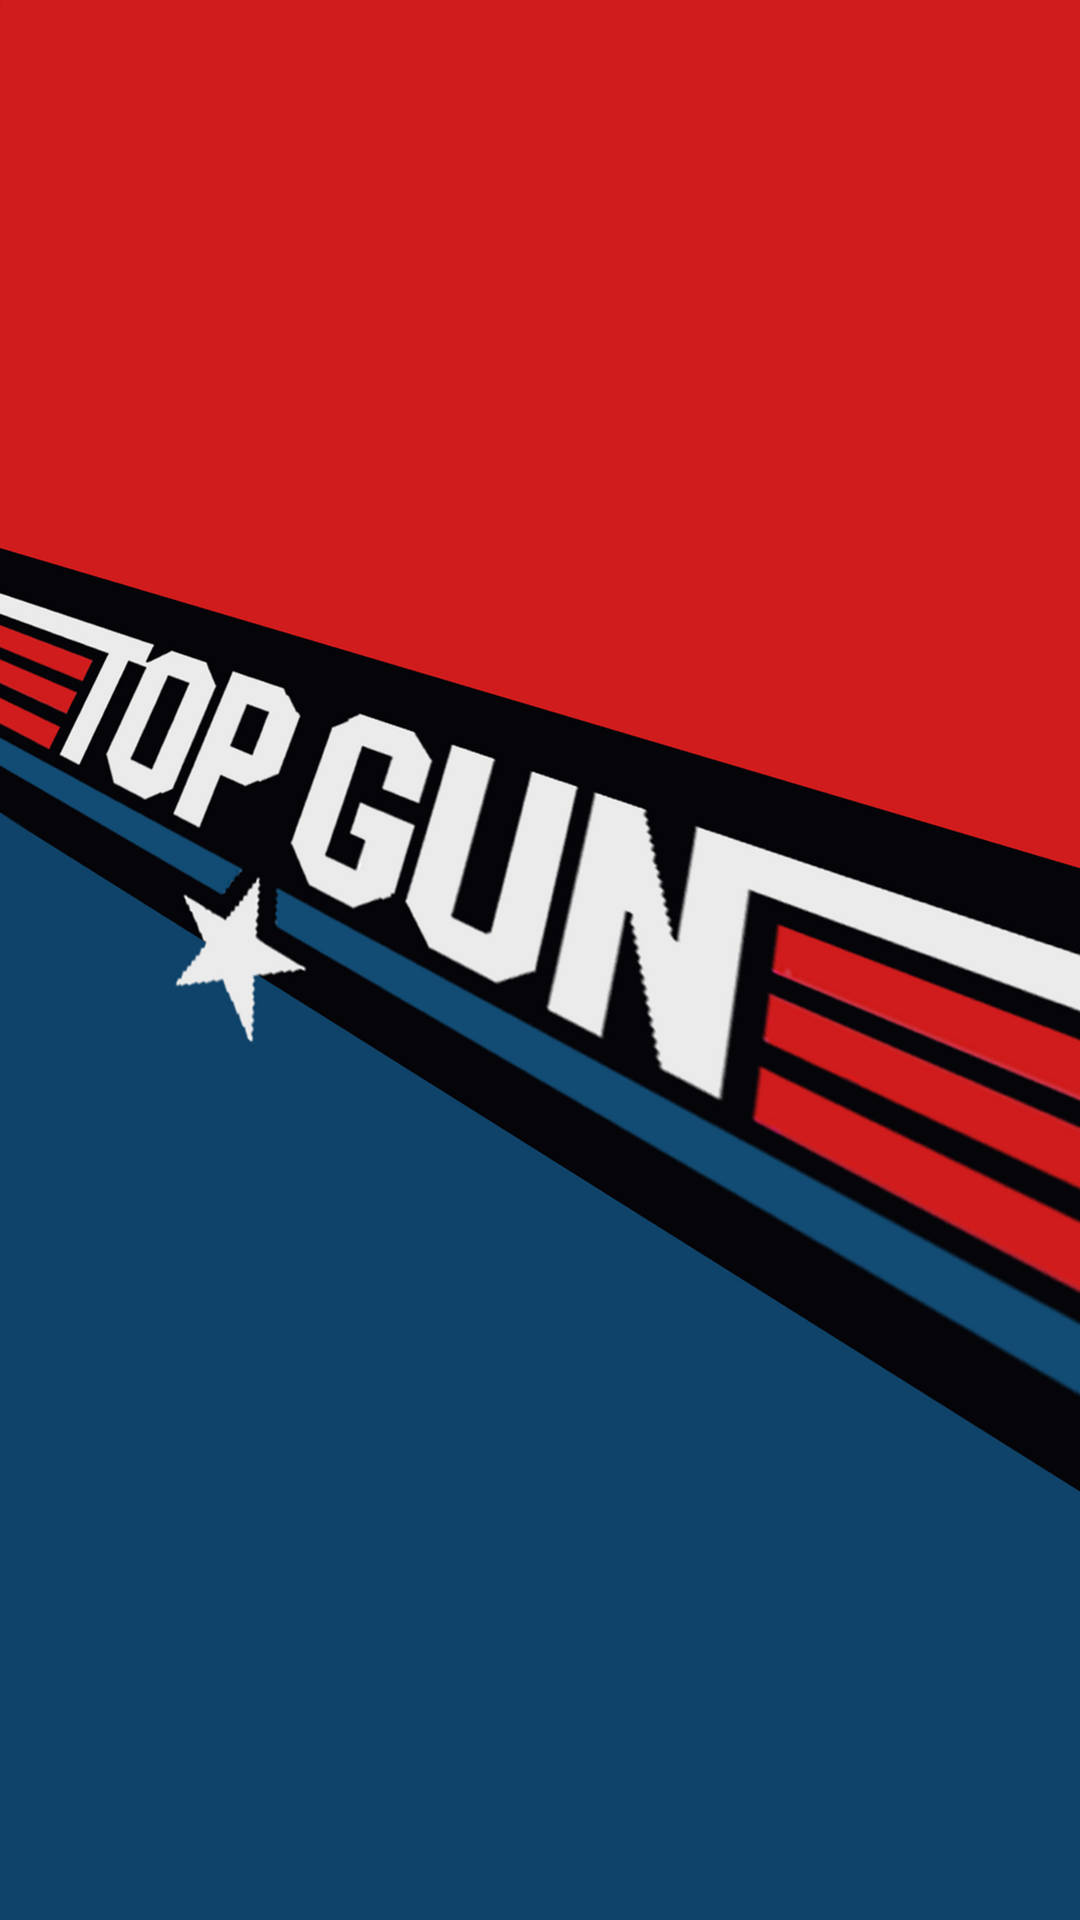 Top Gun Maverick Graphic Logo Wallpaper